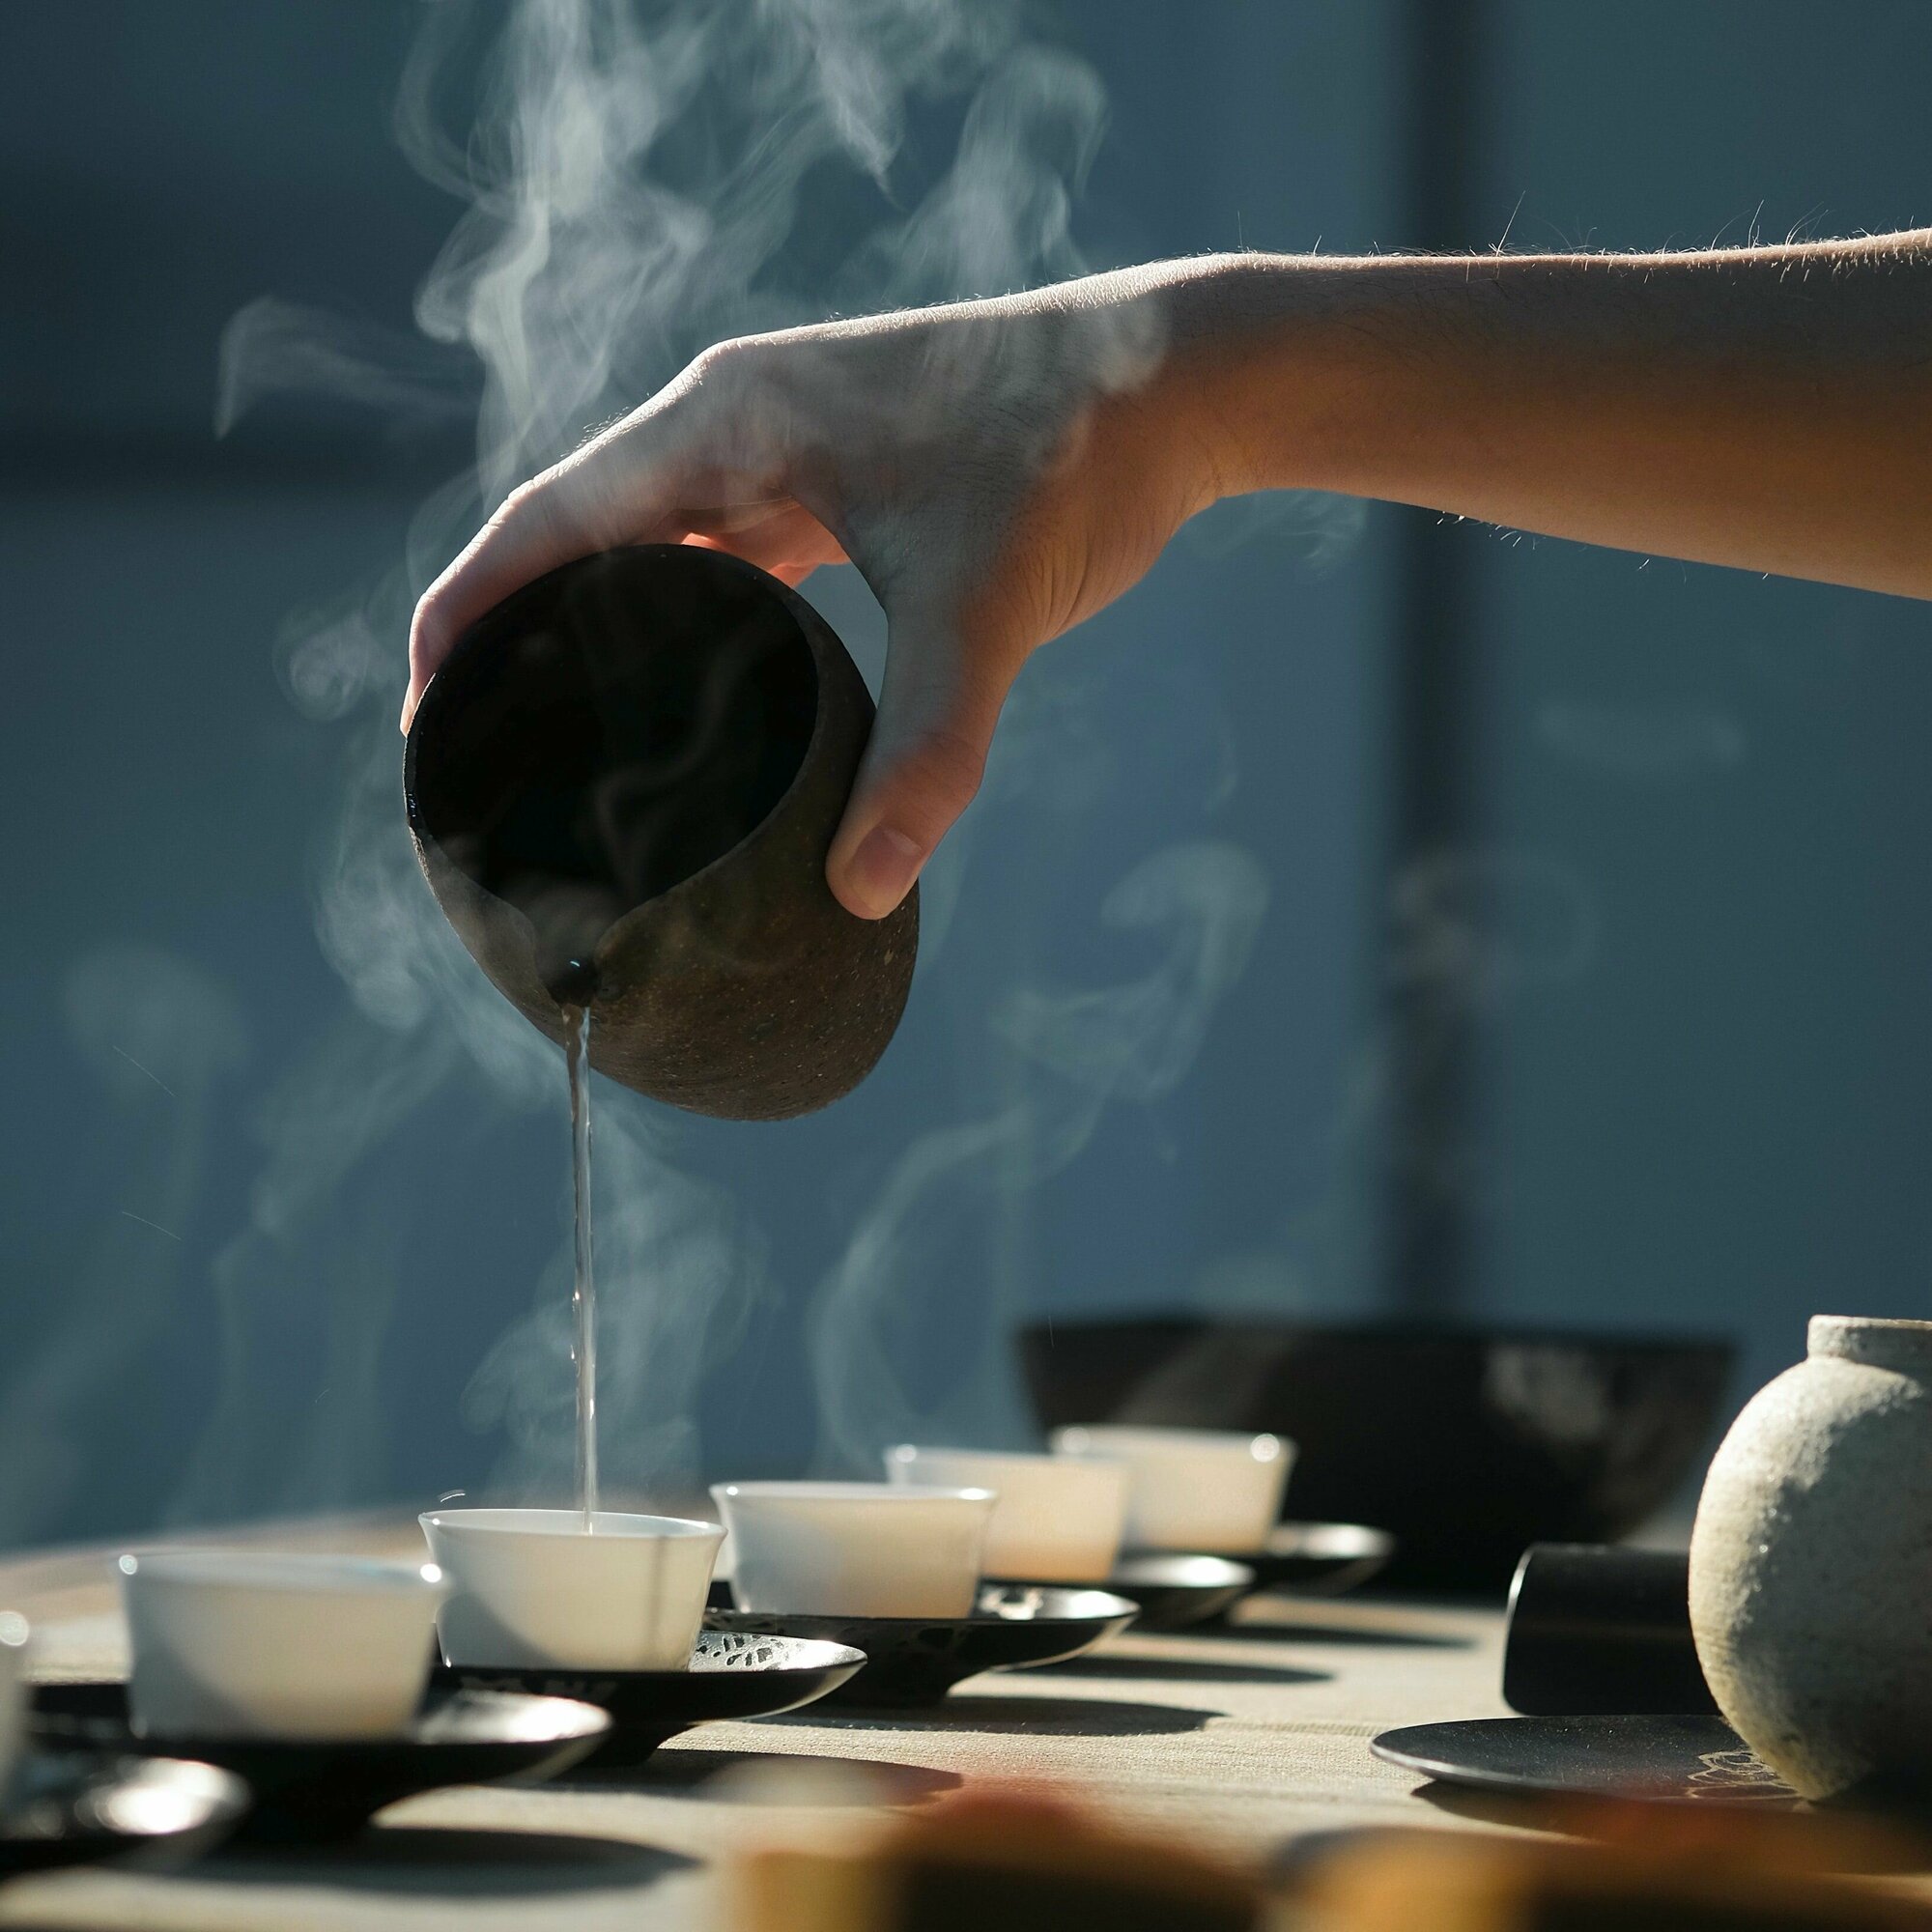 Чай Китайский зеленый Ганпаудер HUNAN 50 грамм